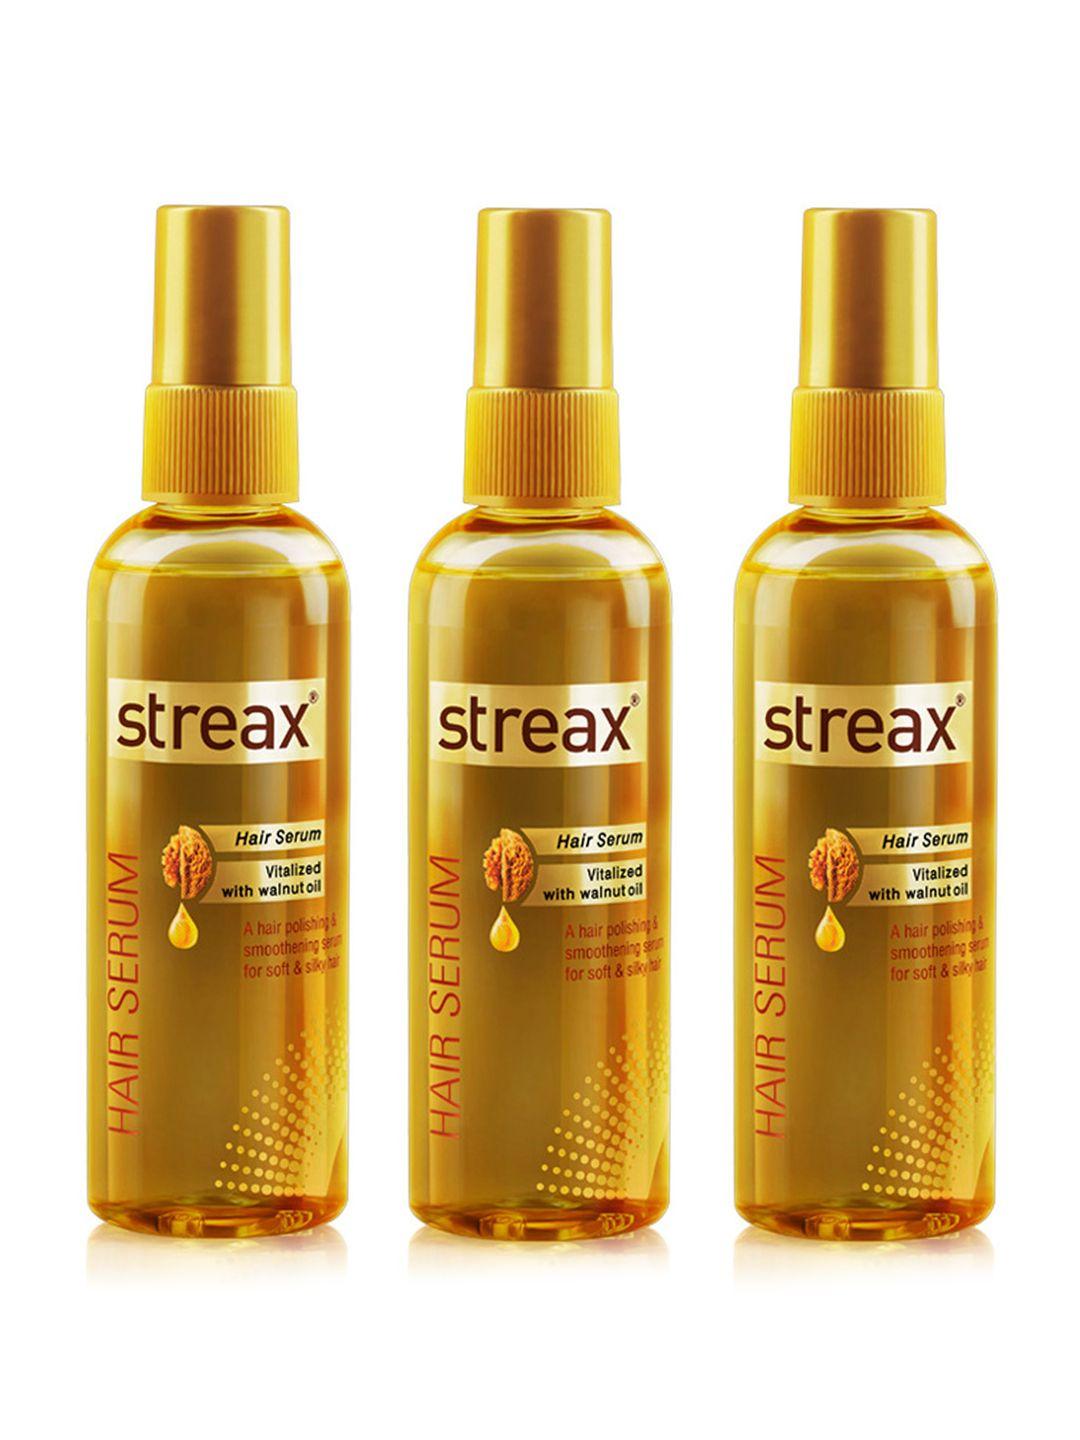 streax set of 3 vitalised hair serum with walnut oil & vitamin e - 45ml each